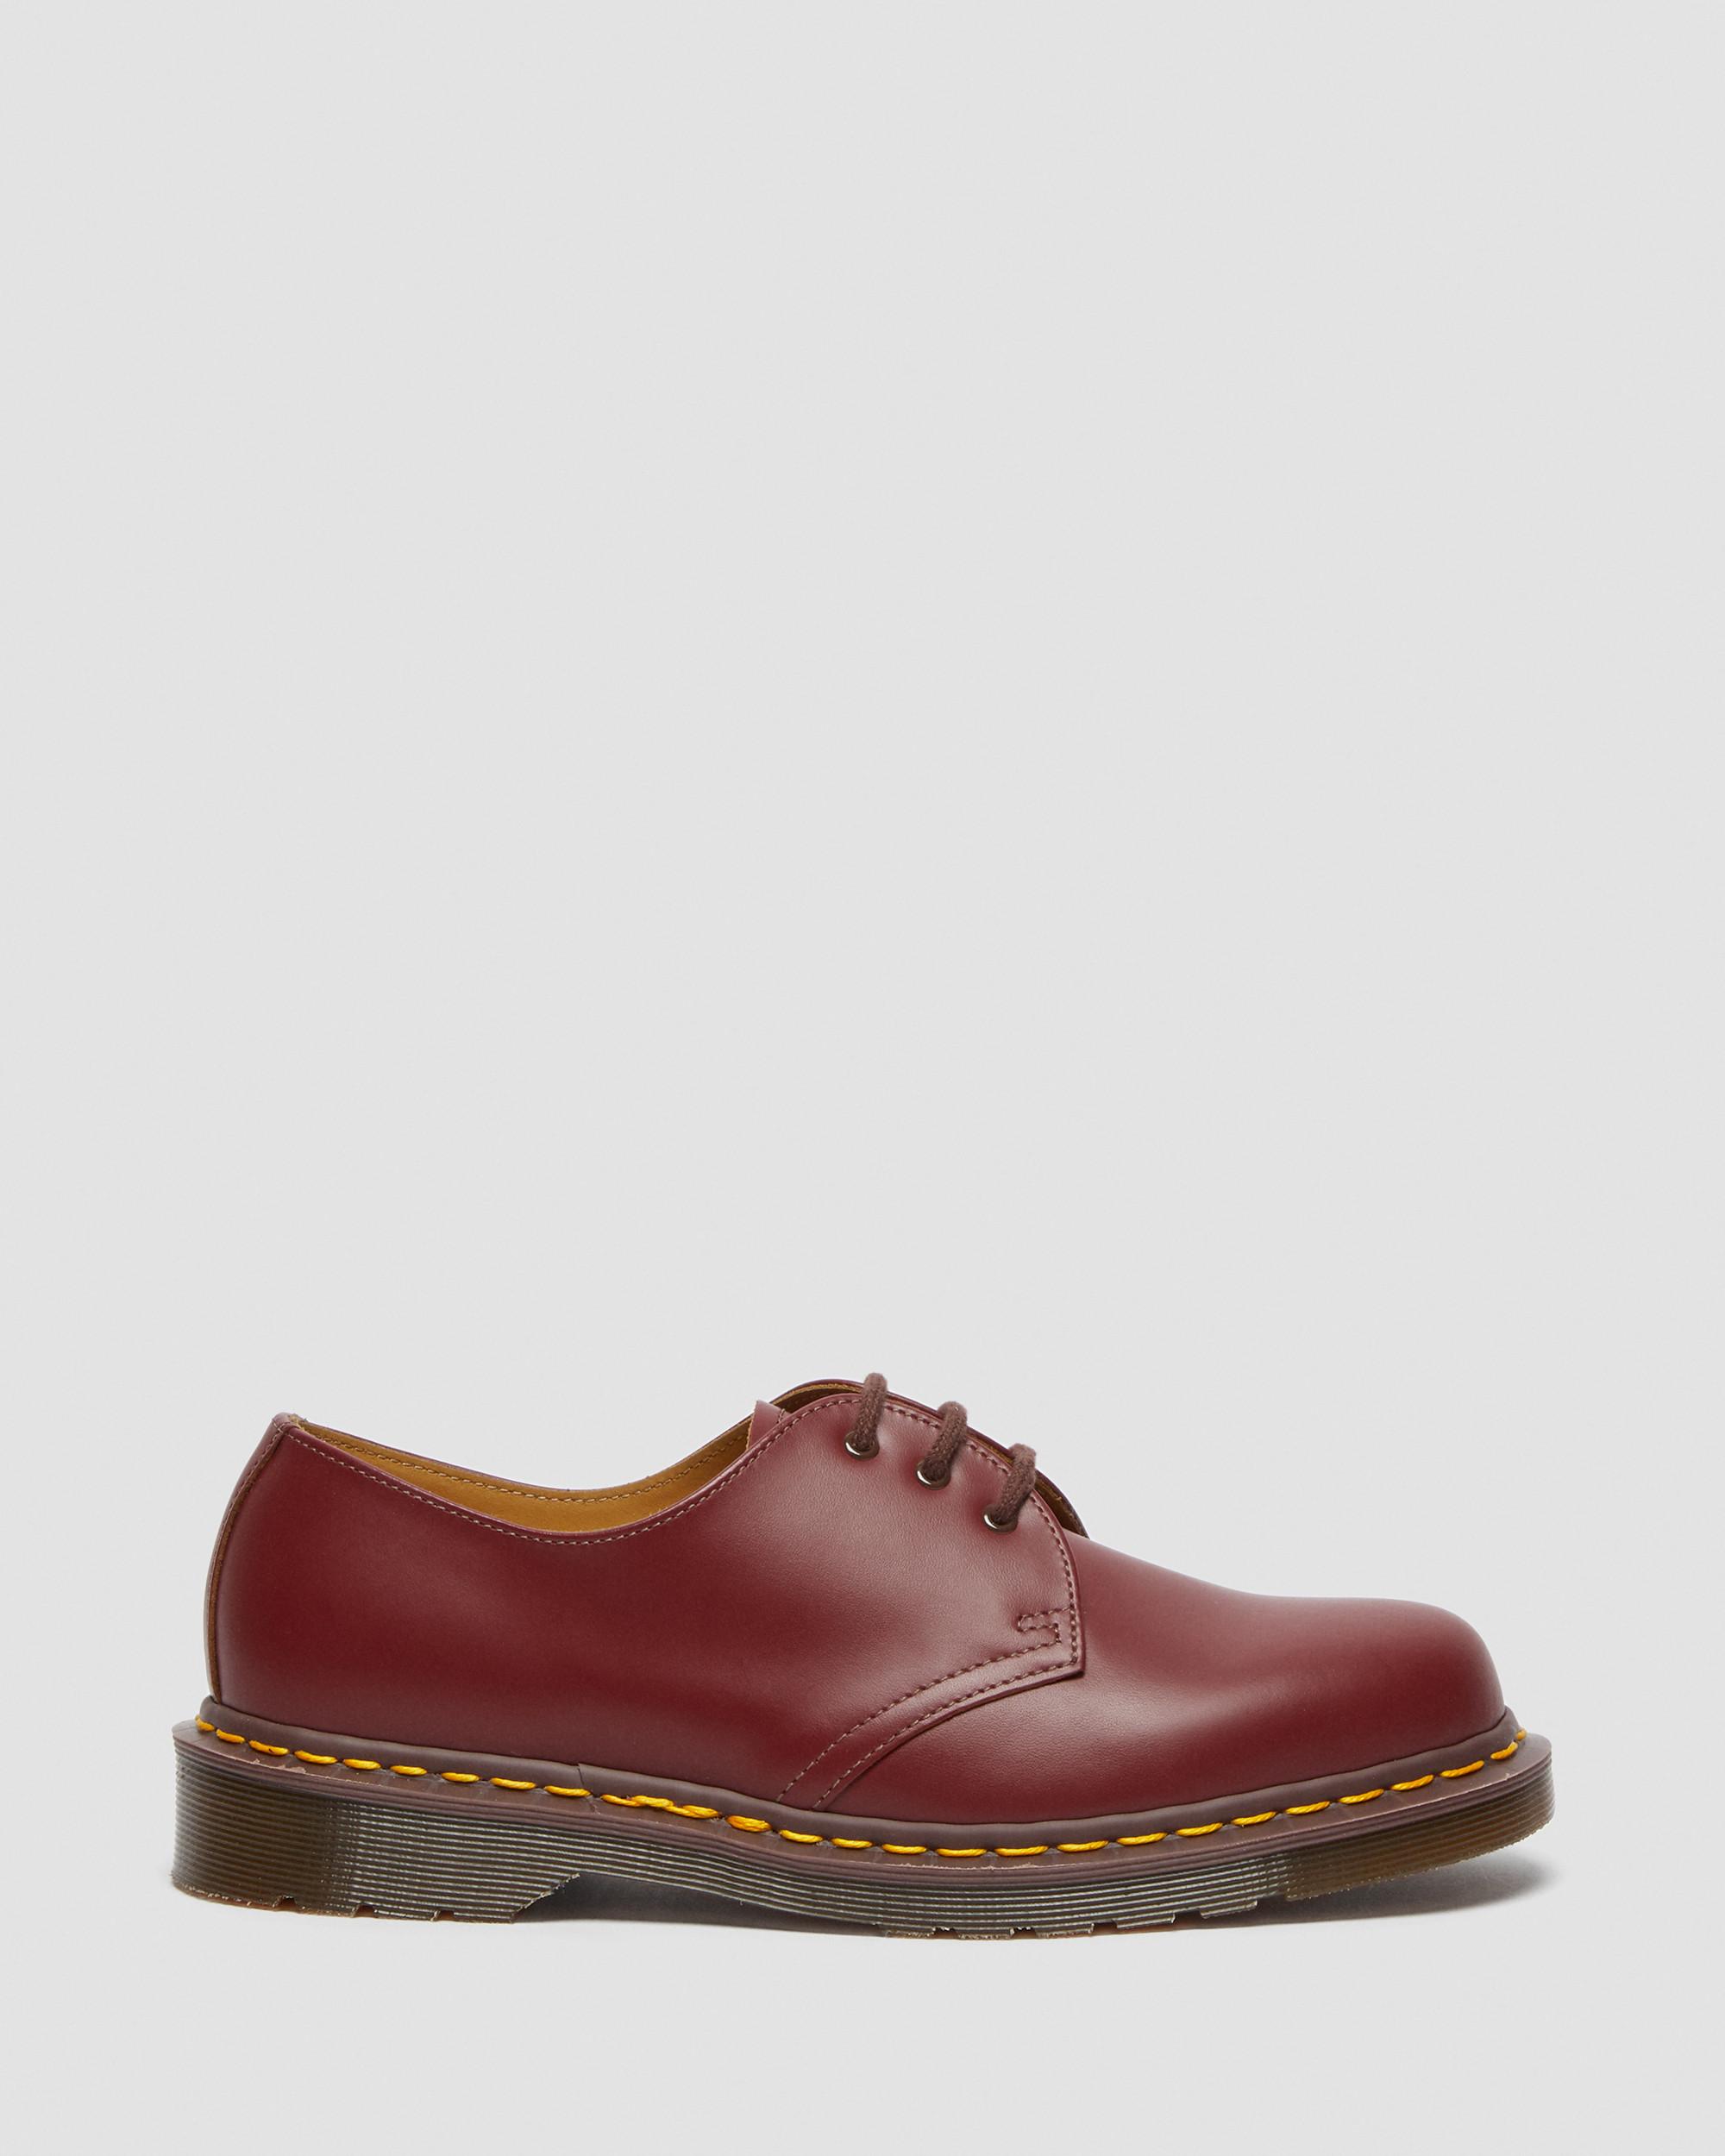 VINTAGE 1461 DARK REDVintage 1461 Quilon Leather Oxford Shoes Dr. Martens